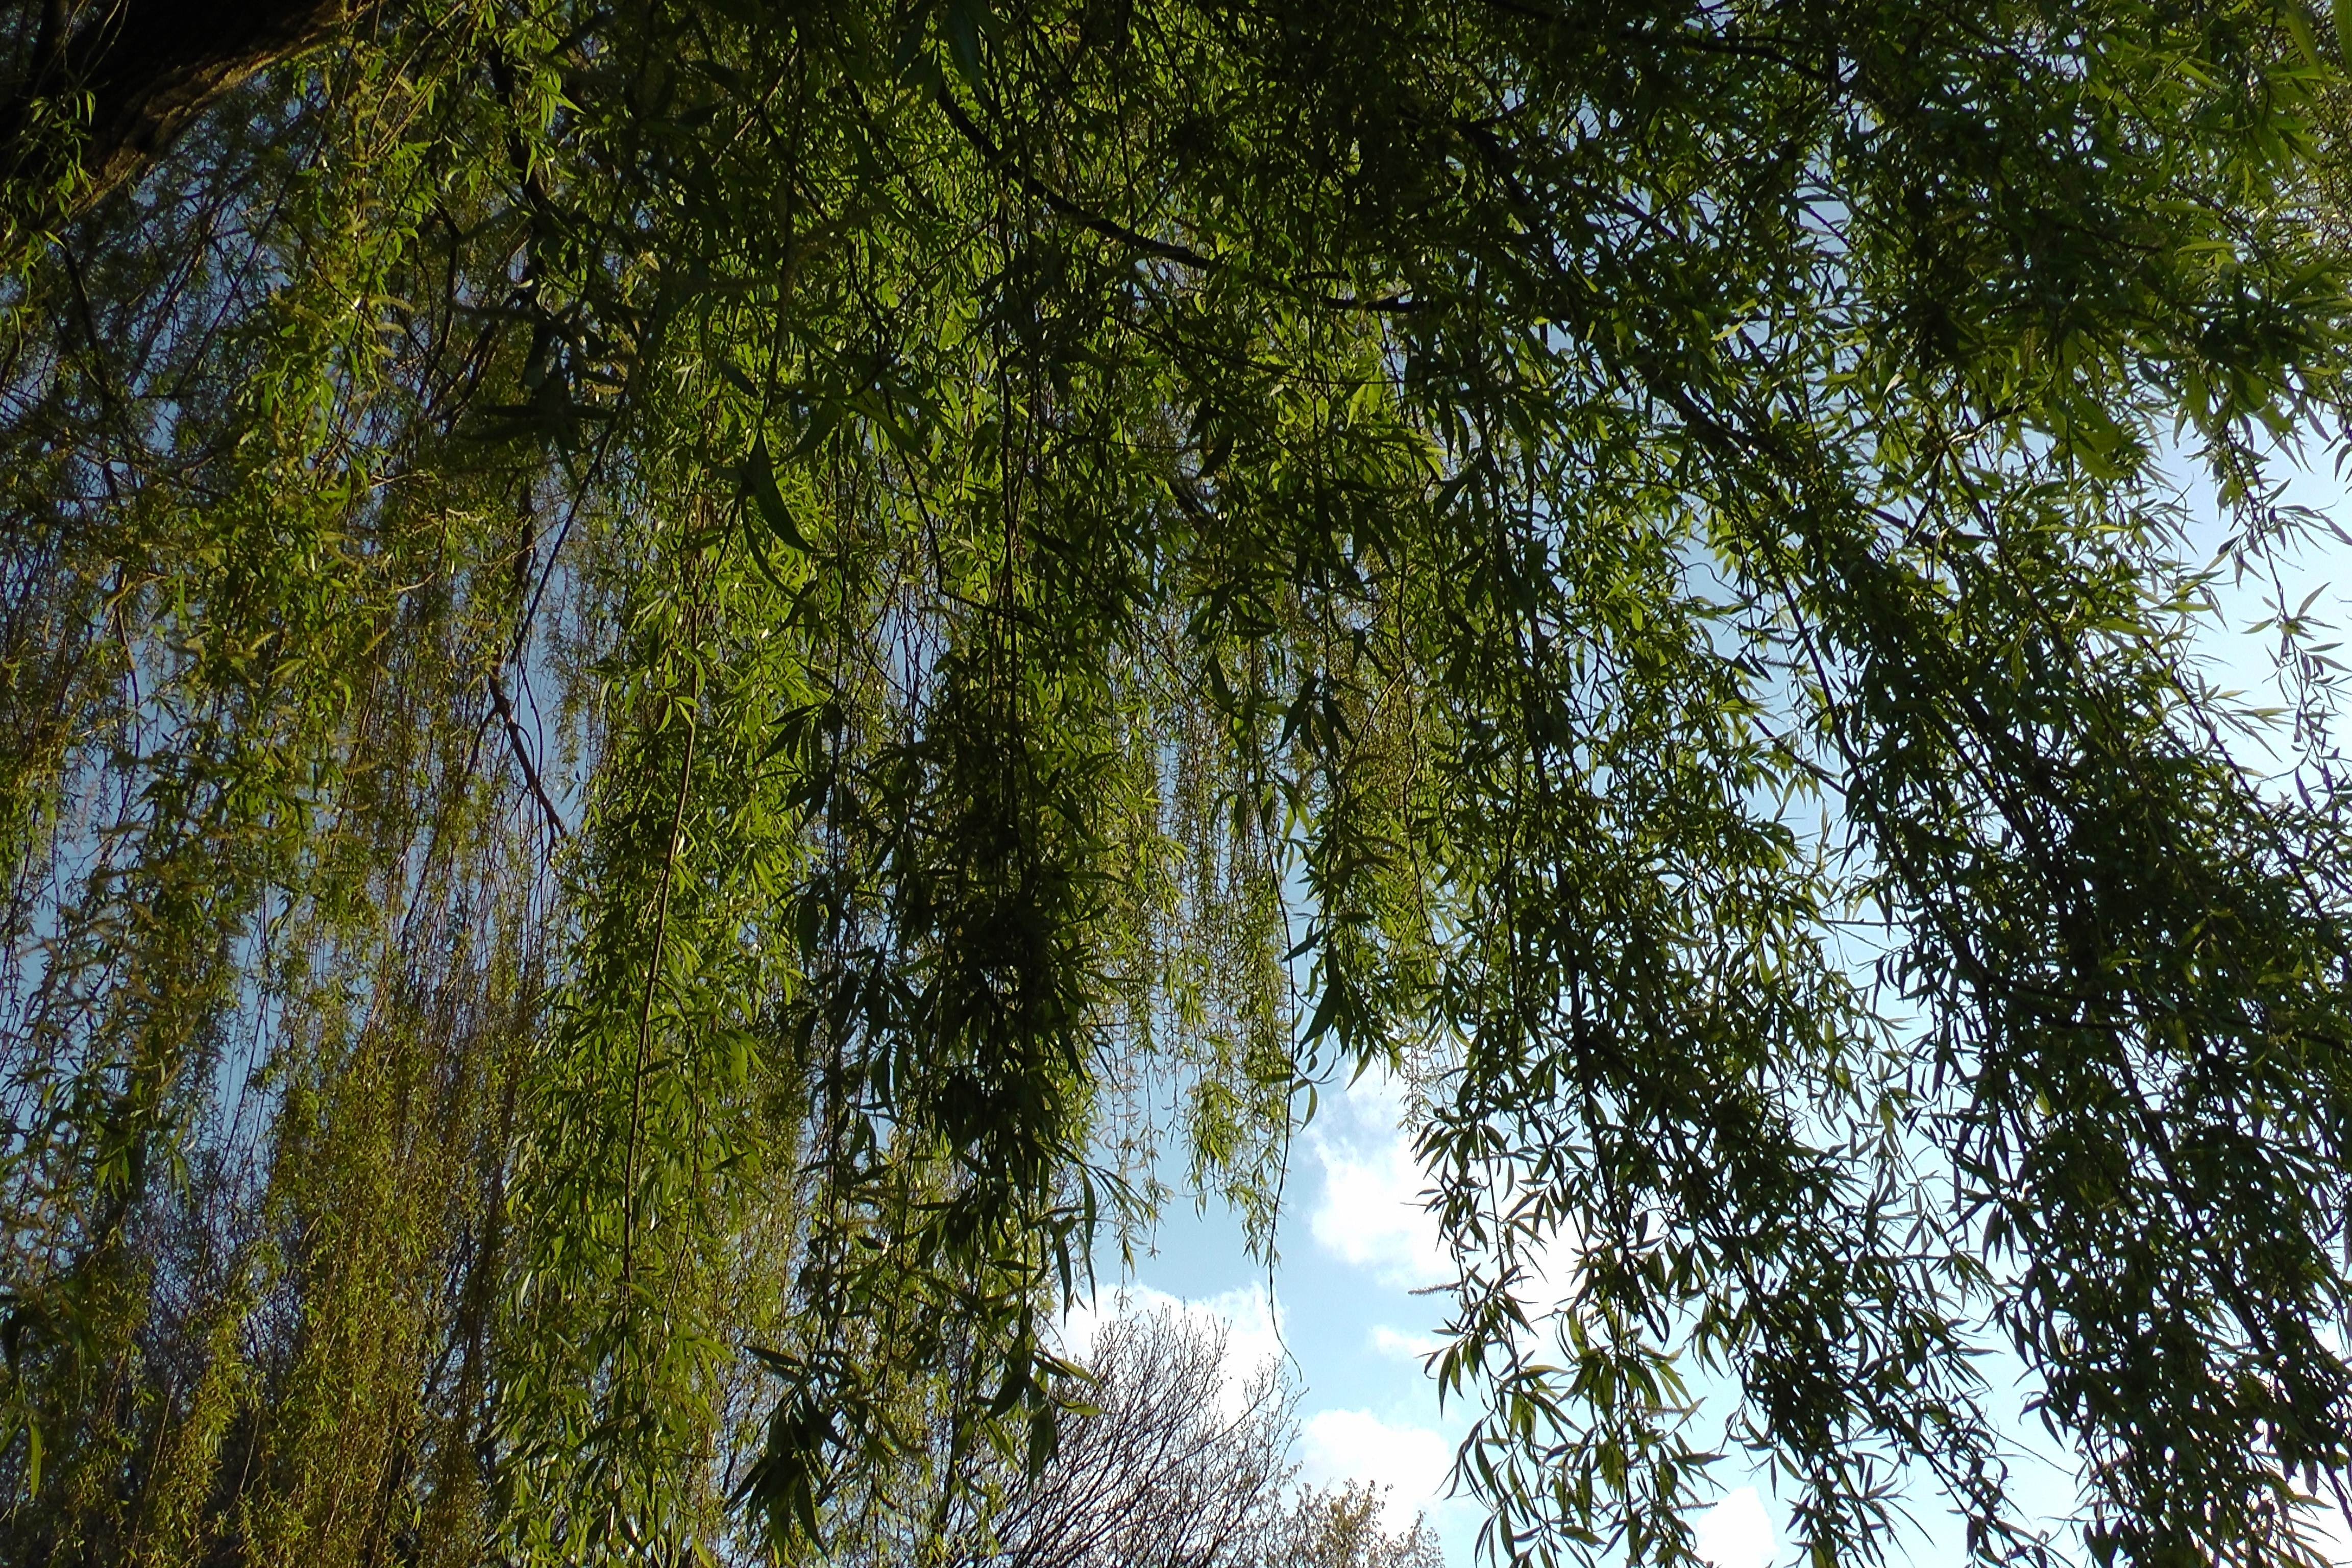 green leaf trees under clouded blue sky at daytime